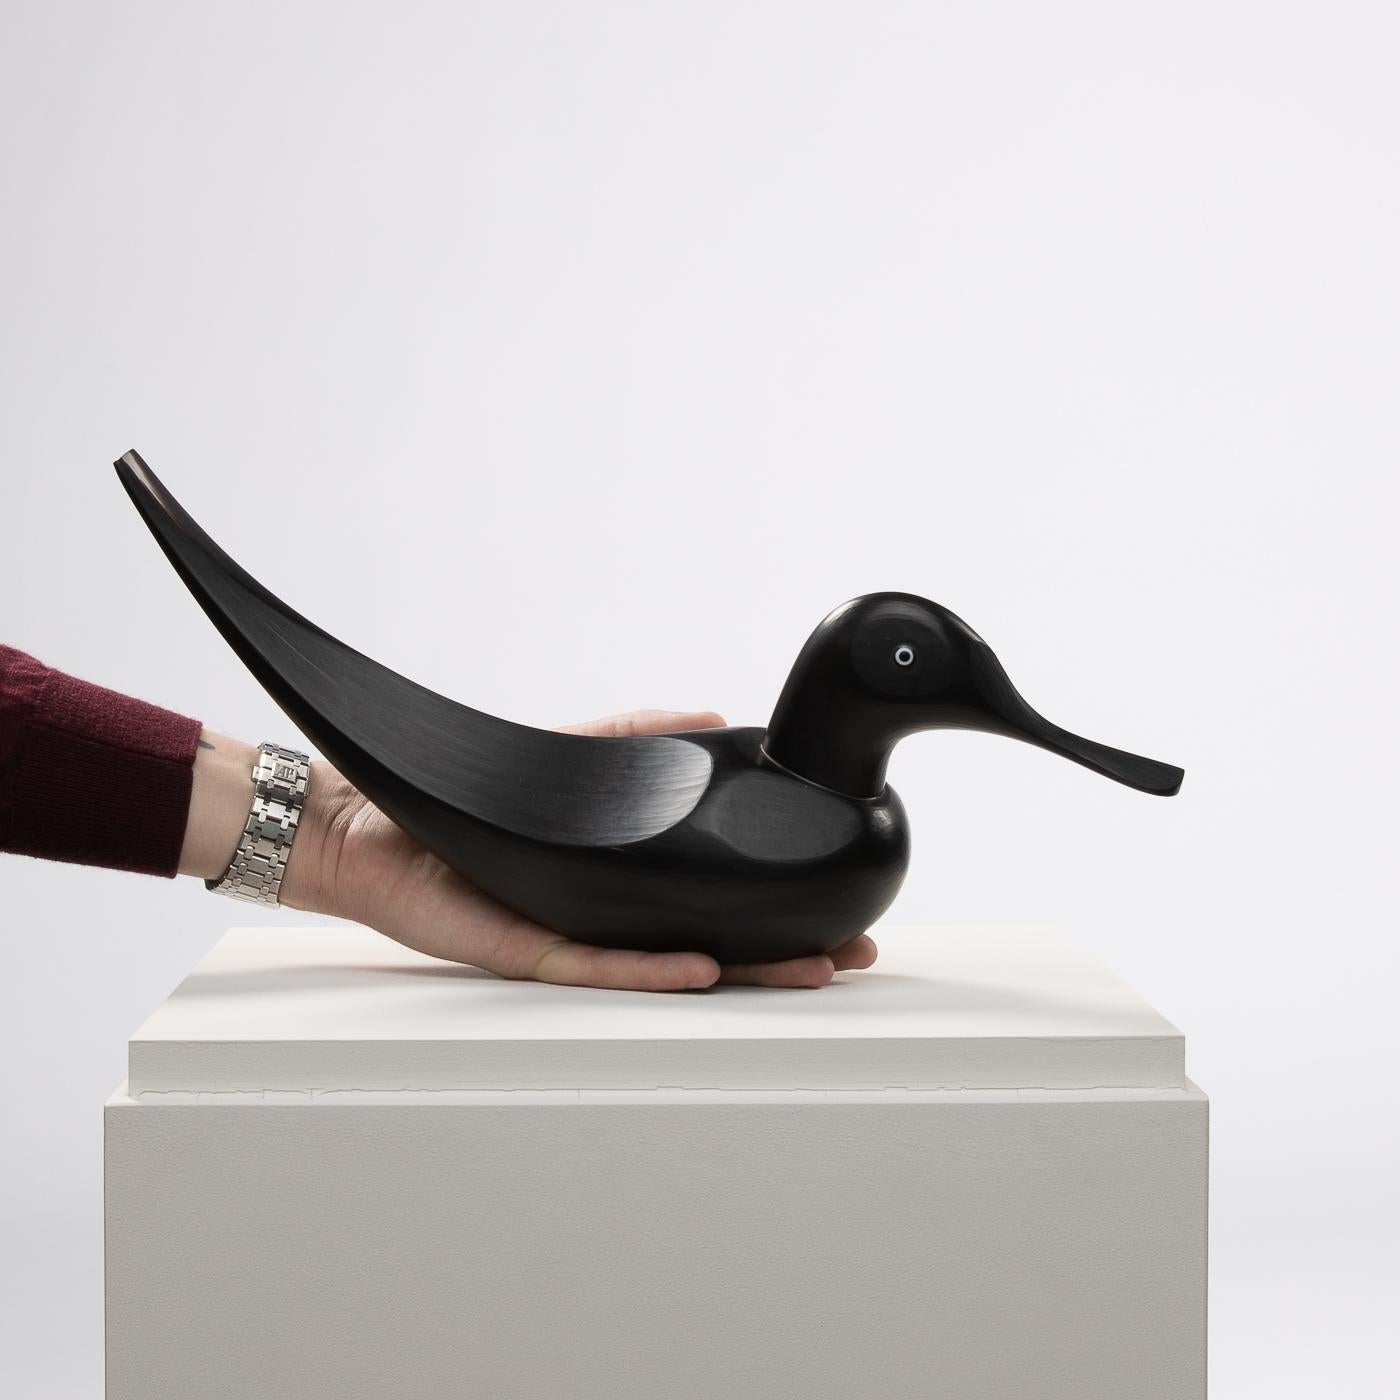 Fischione sculpture of a duck by Toni Zuccheri - Venini ( ITALY ) 1